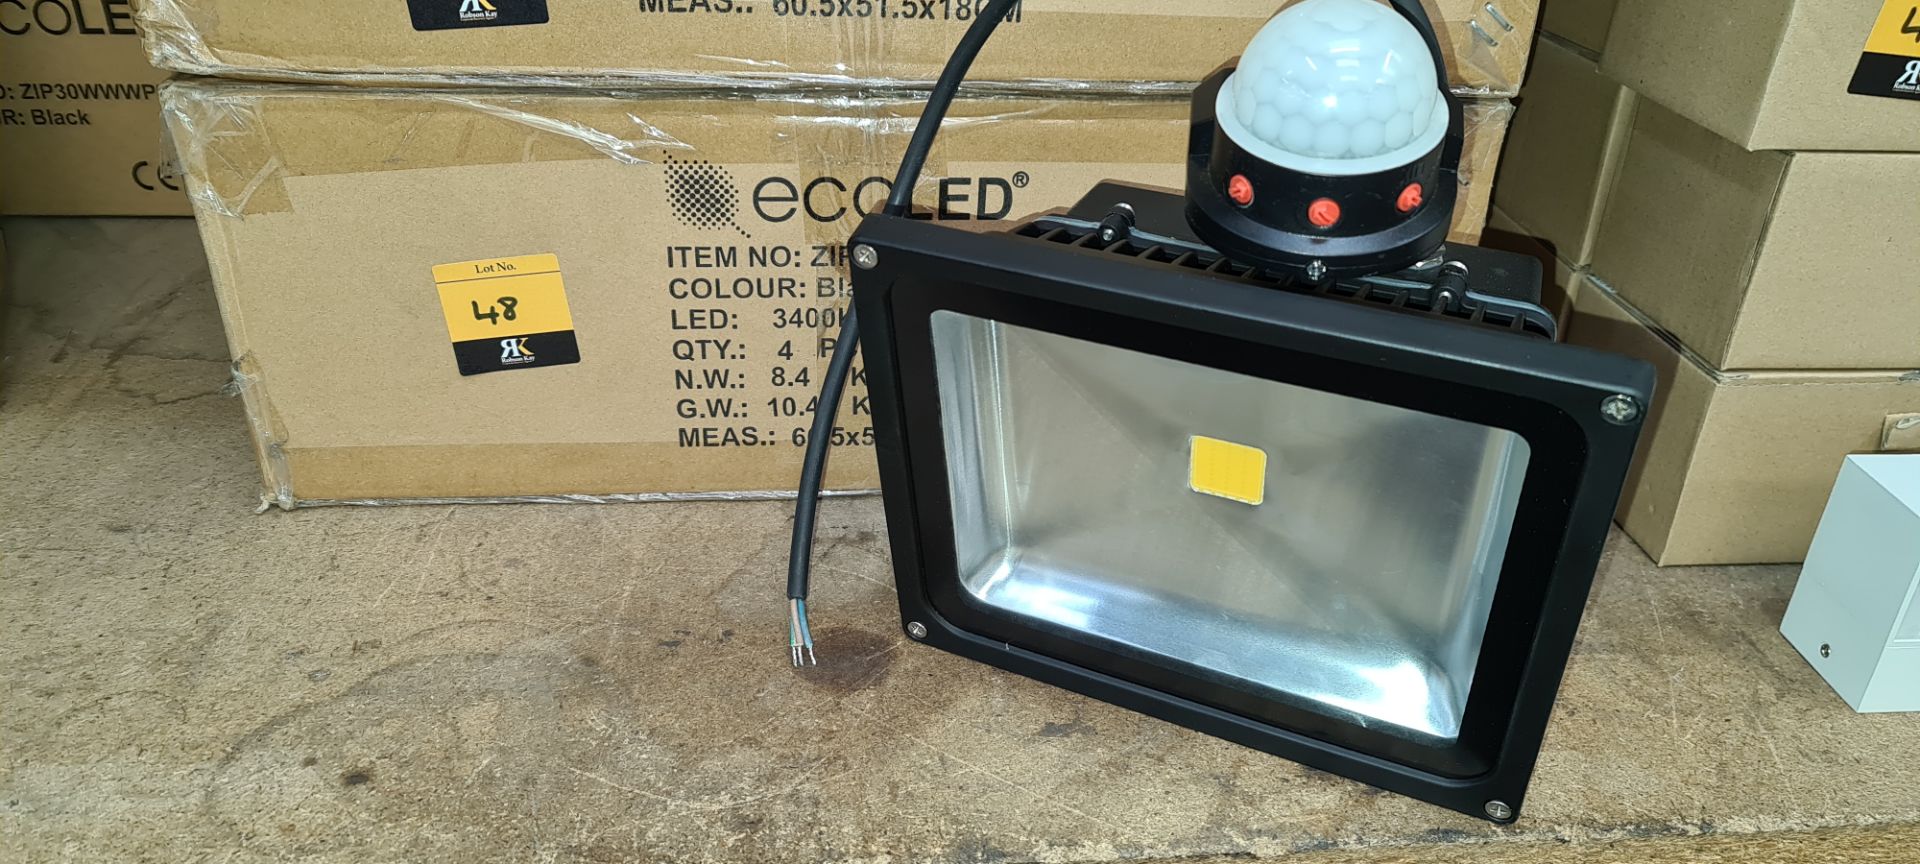 4 off EcoLED floodlights with built-in sensors. Item ZIP30WWWPIR, 36W LED PIR floodlights - Image 2 of 8